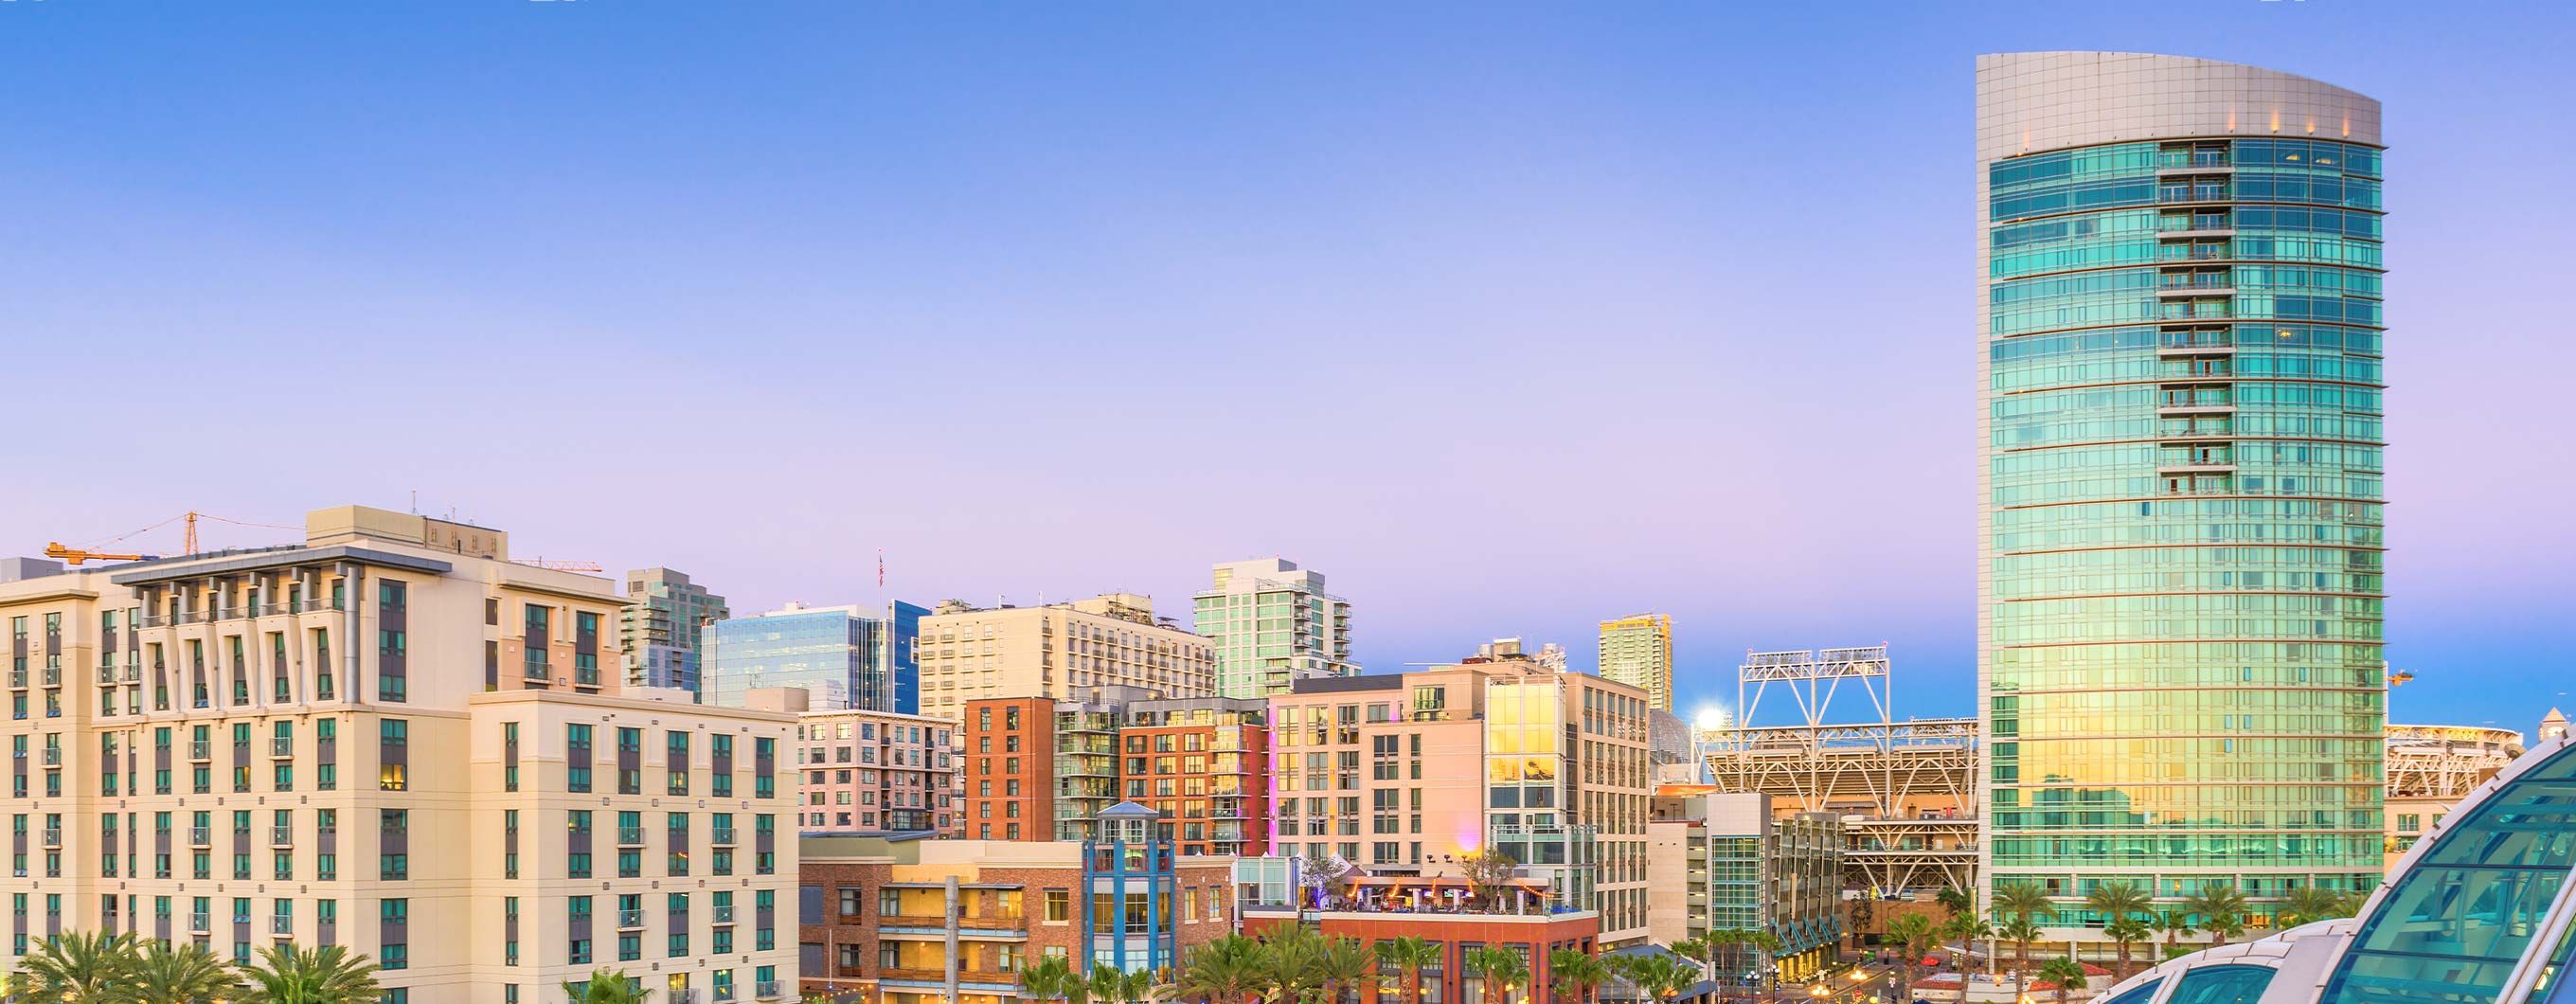 Image of a San Diego city skyline with a blue and purple sky